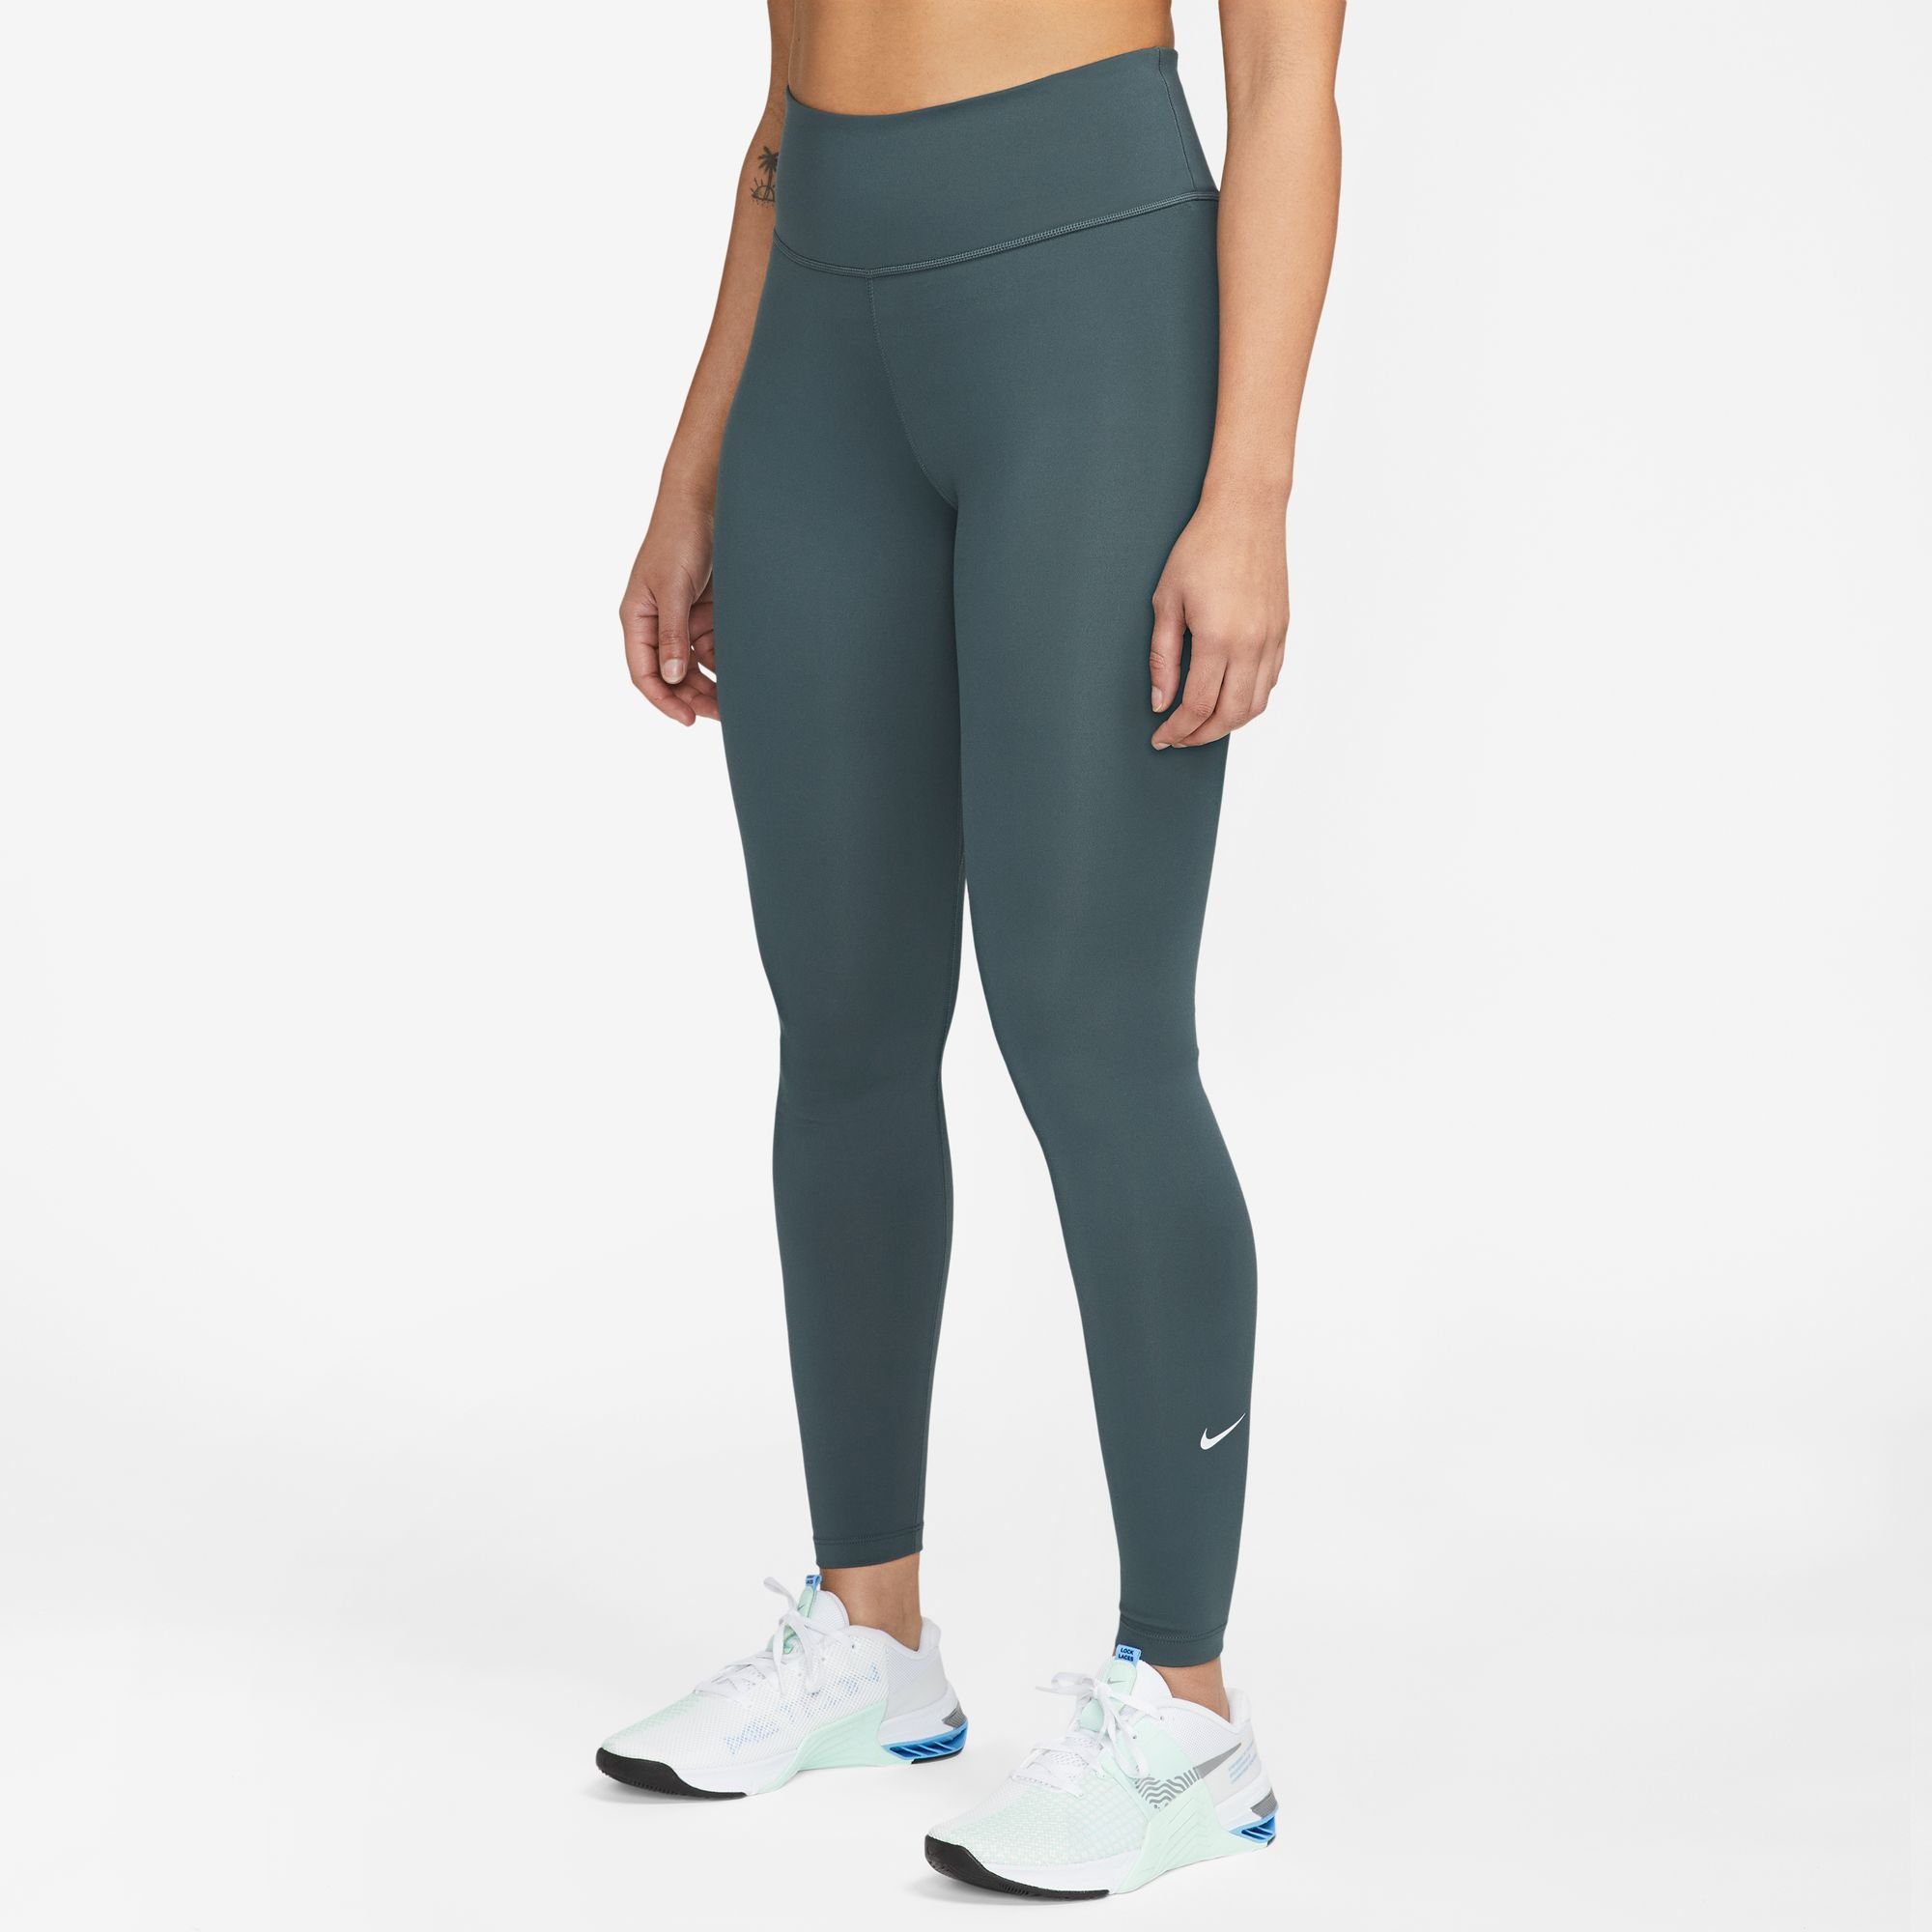 ONE JUNGLE/WHITE DEEP Nike WOMEN'S Trainingstights LEGGINGS MID-RISE